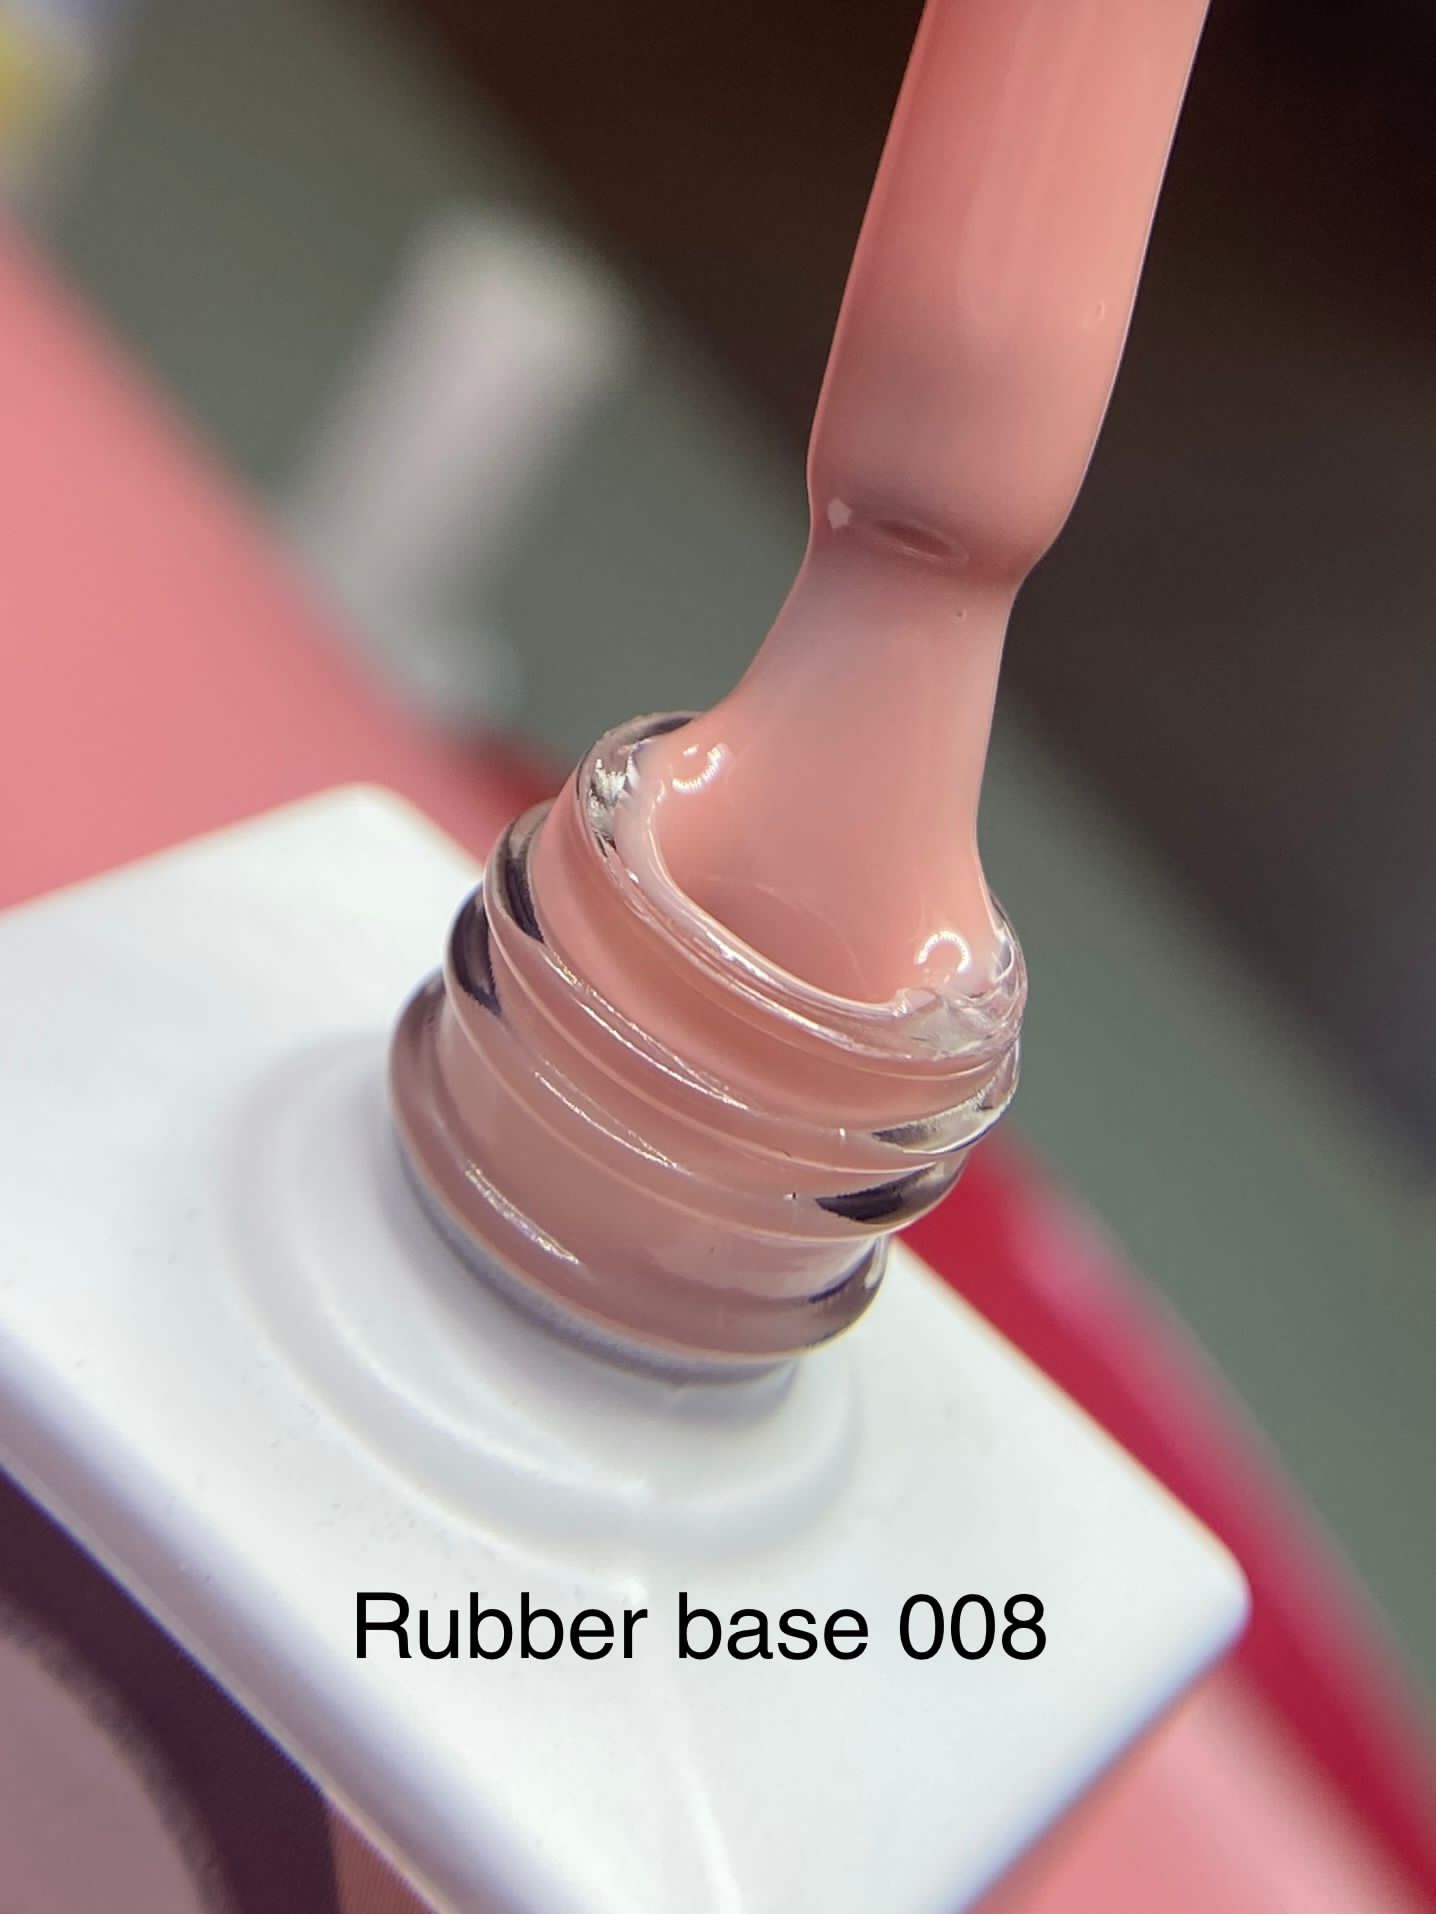 Rubber base 008